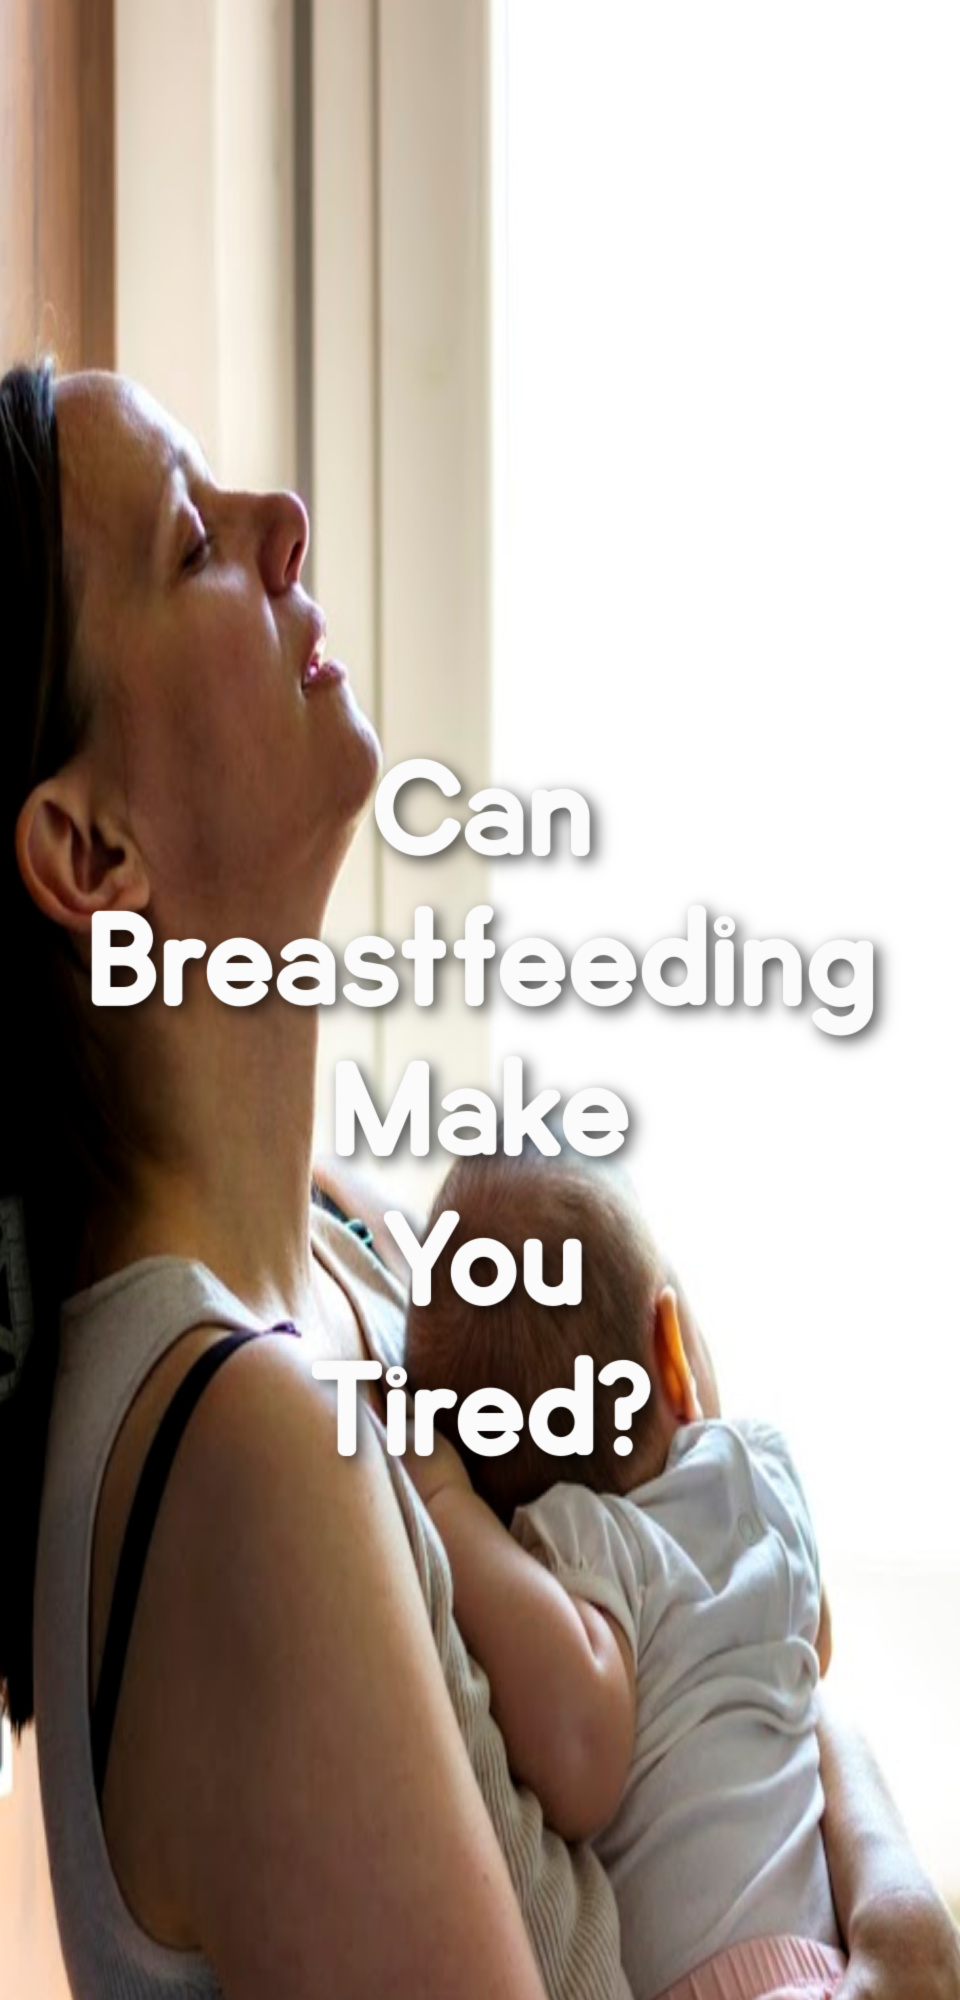 Can Breastfeeding Make You Tired?